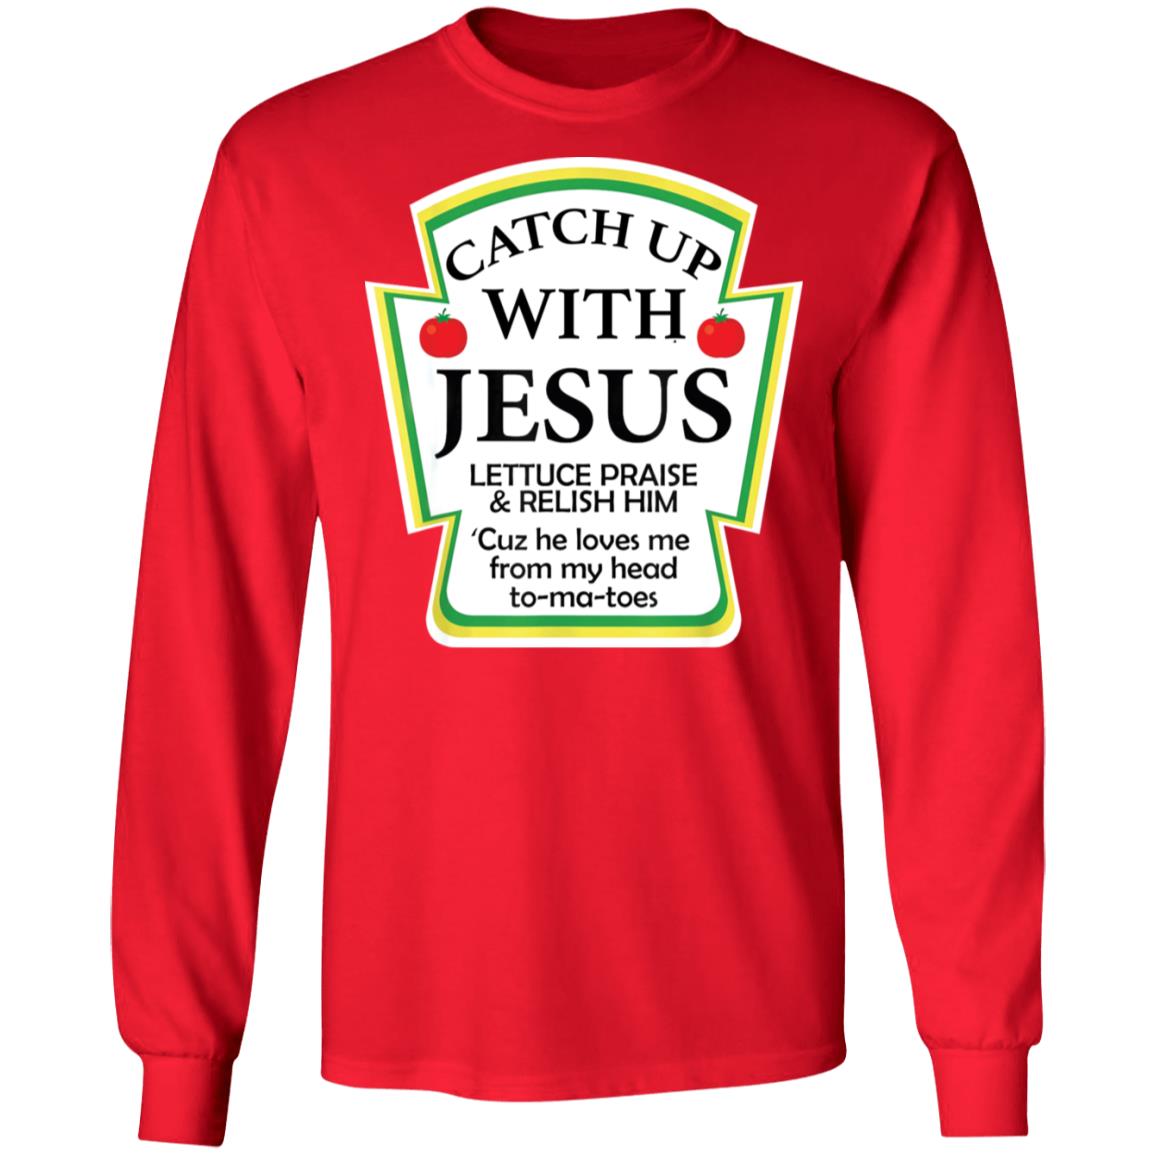 Catch up with Jesus lettuce praise and relish shirt - Lelemoon